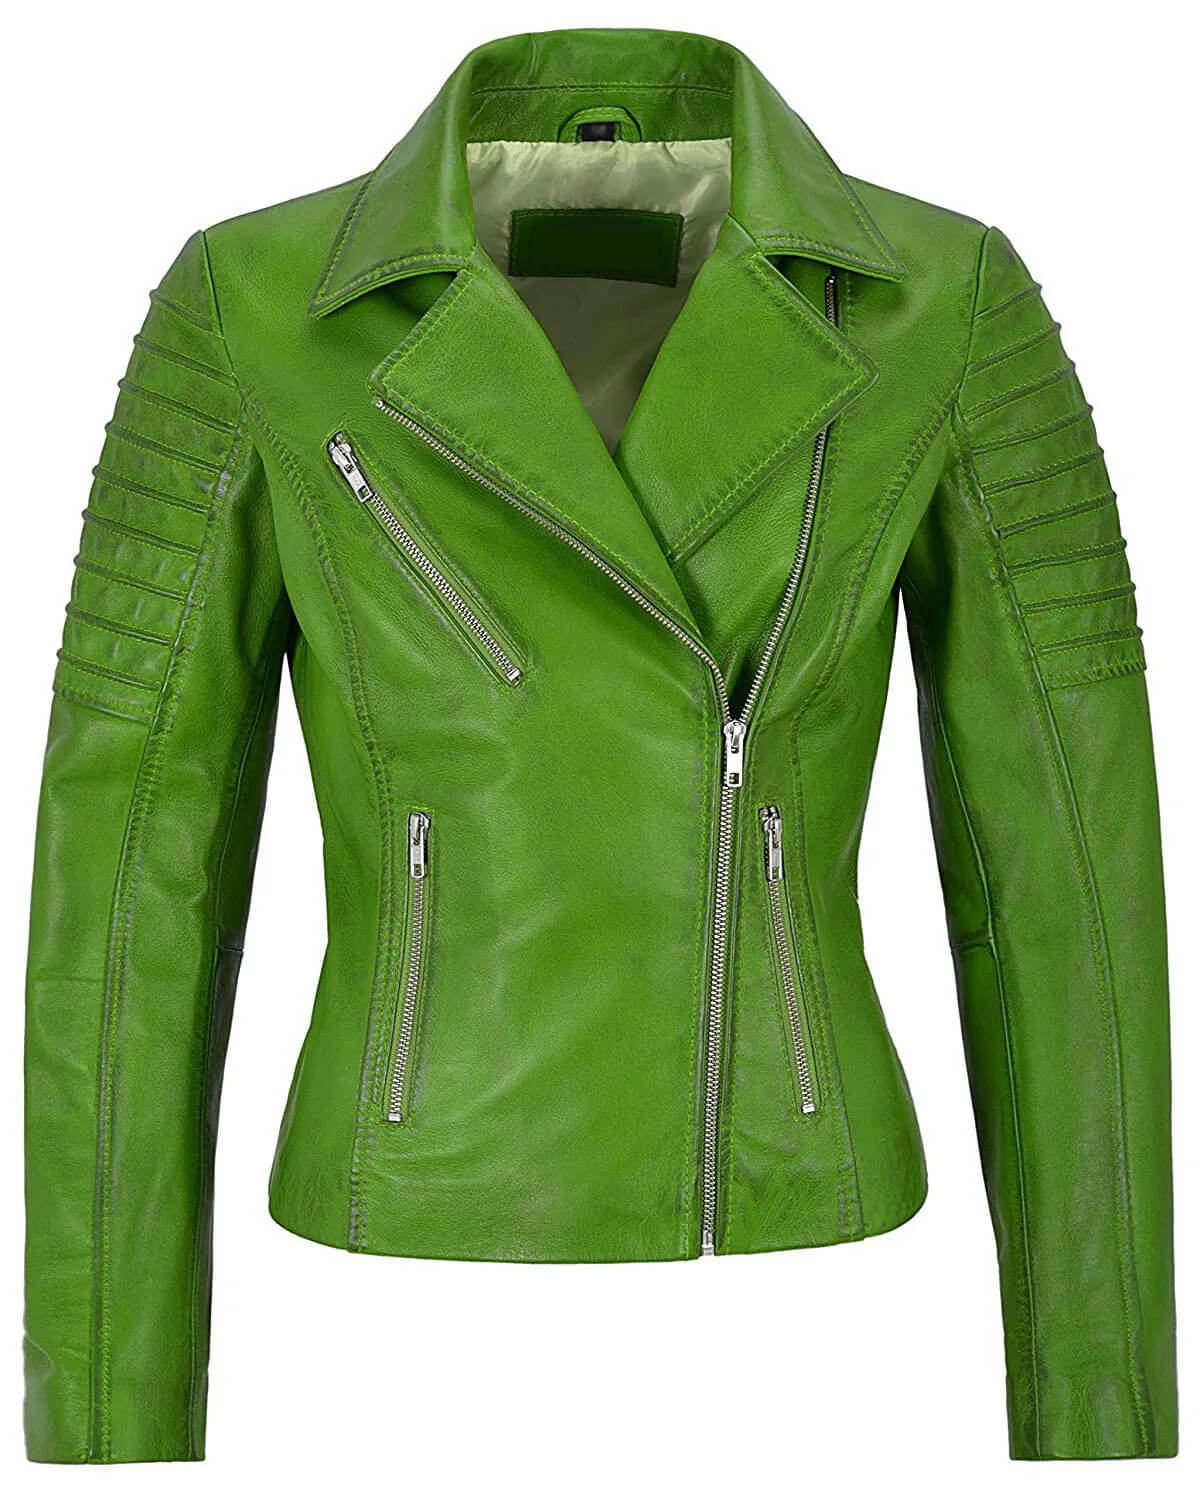 Lime Green Women's Stylish Biker Leather Jacket - Maker of Jacket